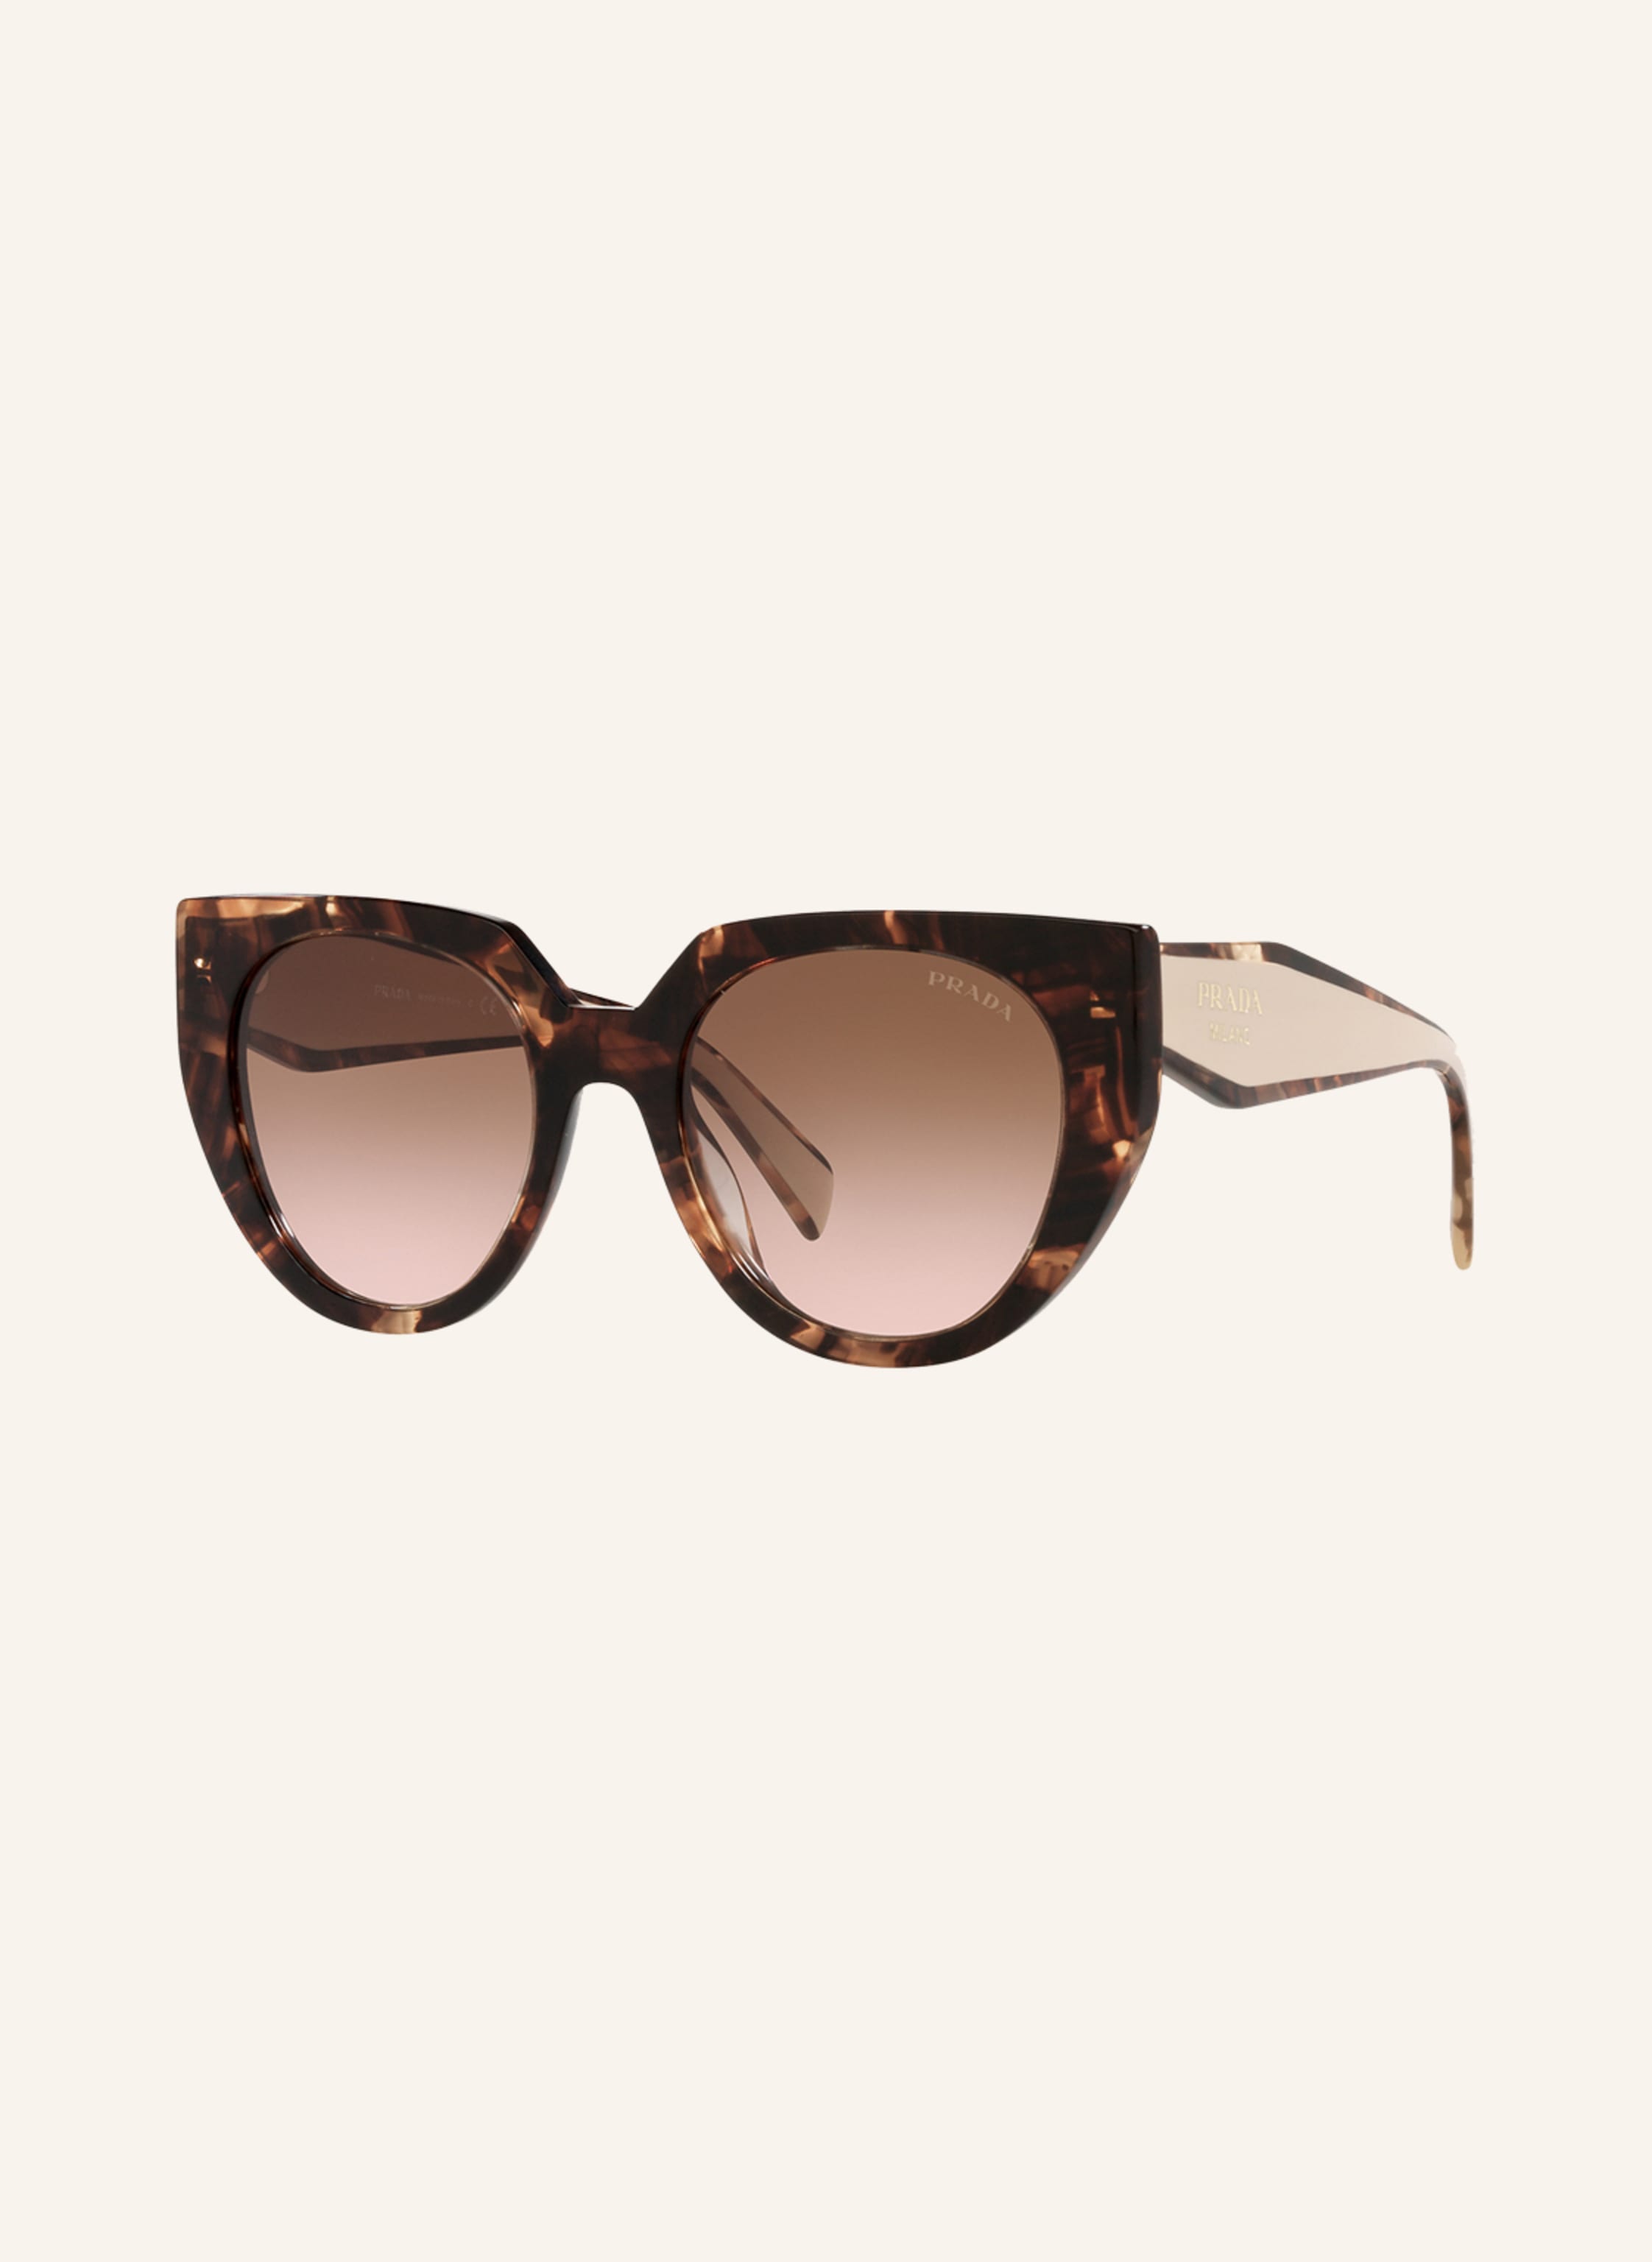 PRADA Sunglasses PR14WS in 01r0a652- havanna/ brown gradient | Breuninger